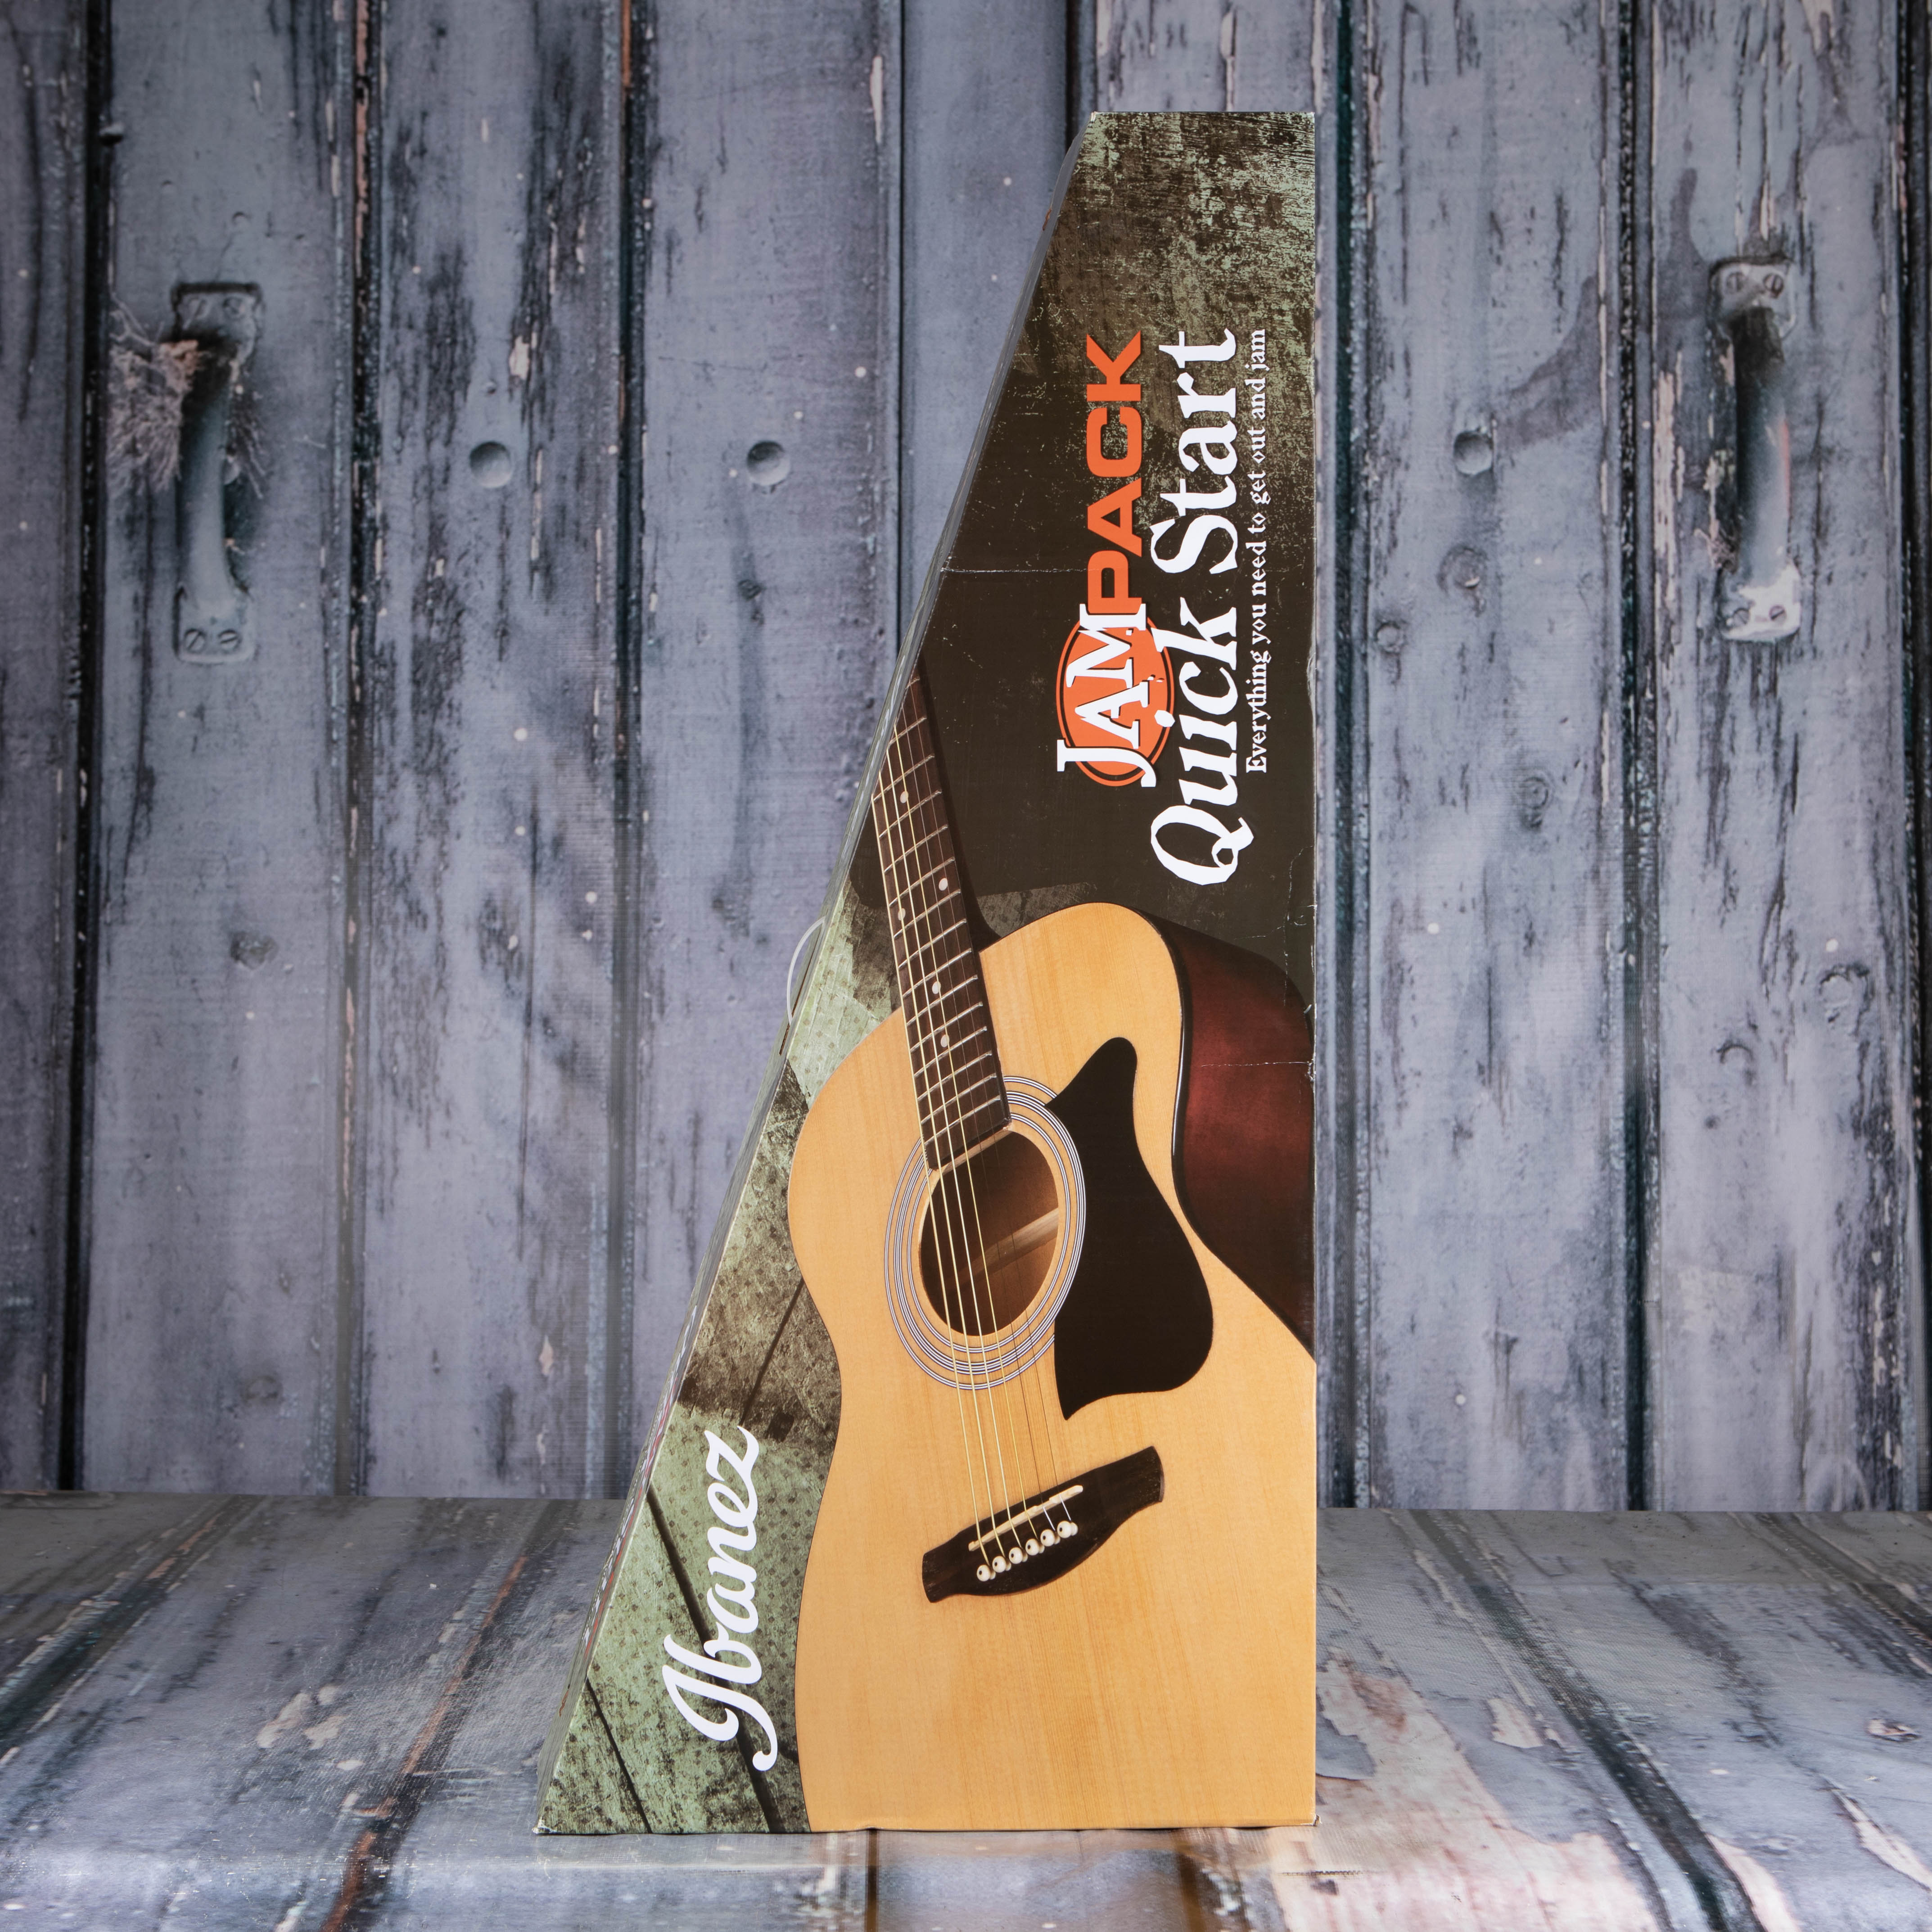 Ibanez IJVC50 Grand Concert Jam Pack Acoustic Guitar, Natural High Gloss, box